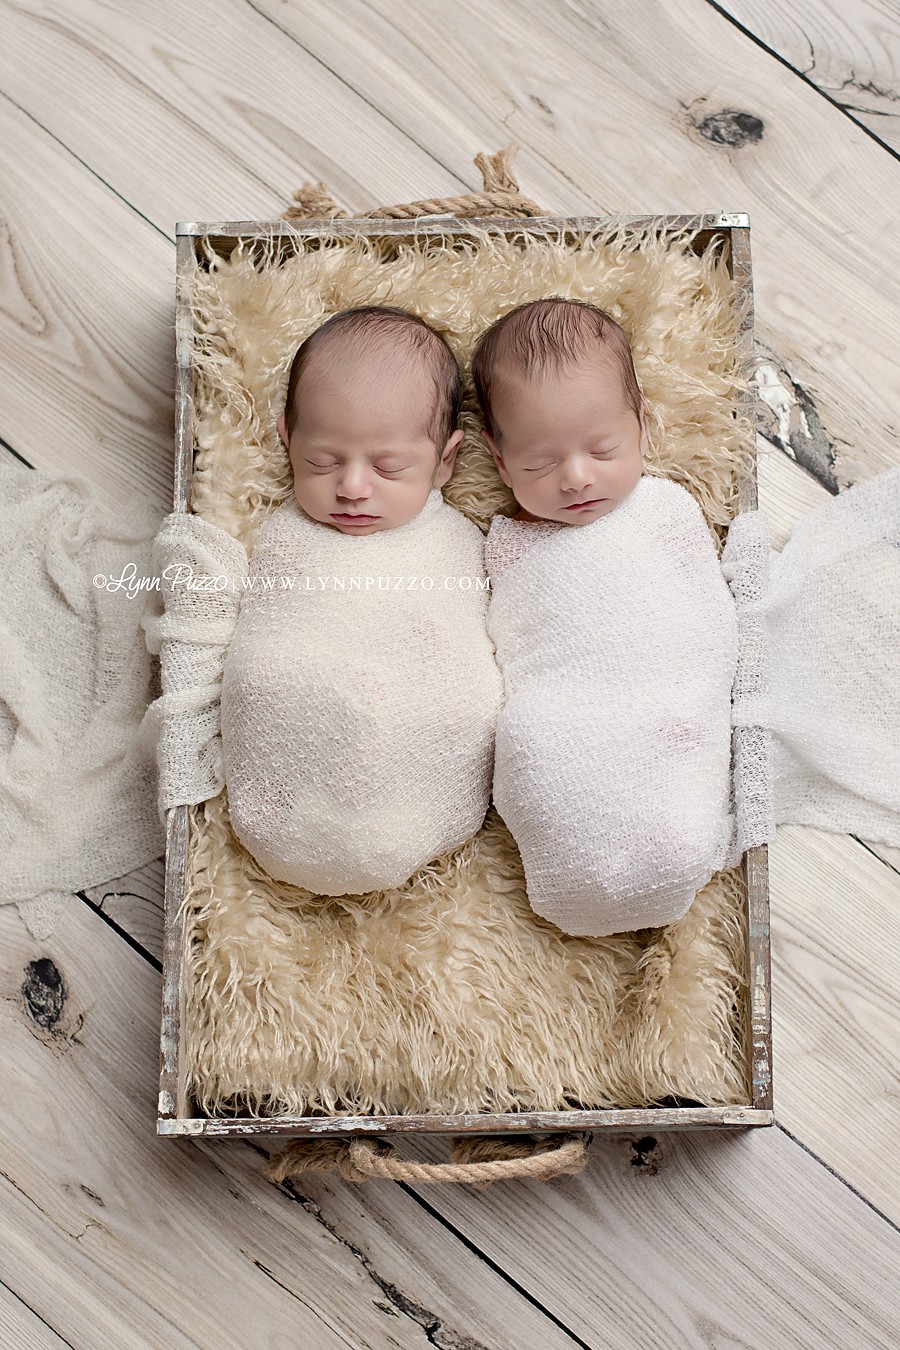 wethersfield_connecticut_twins_newborn_photographer